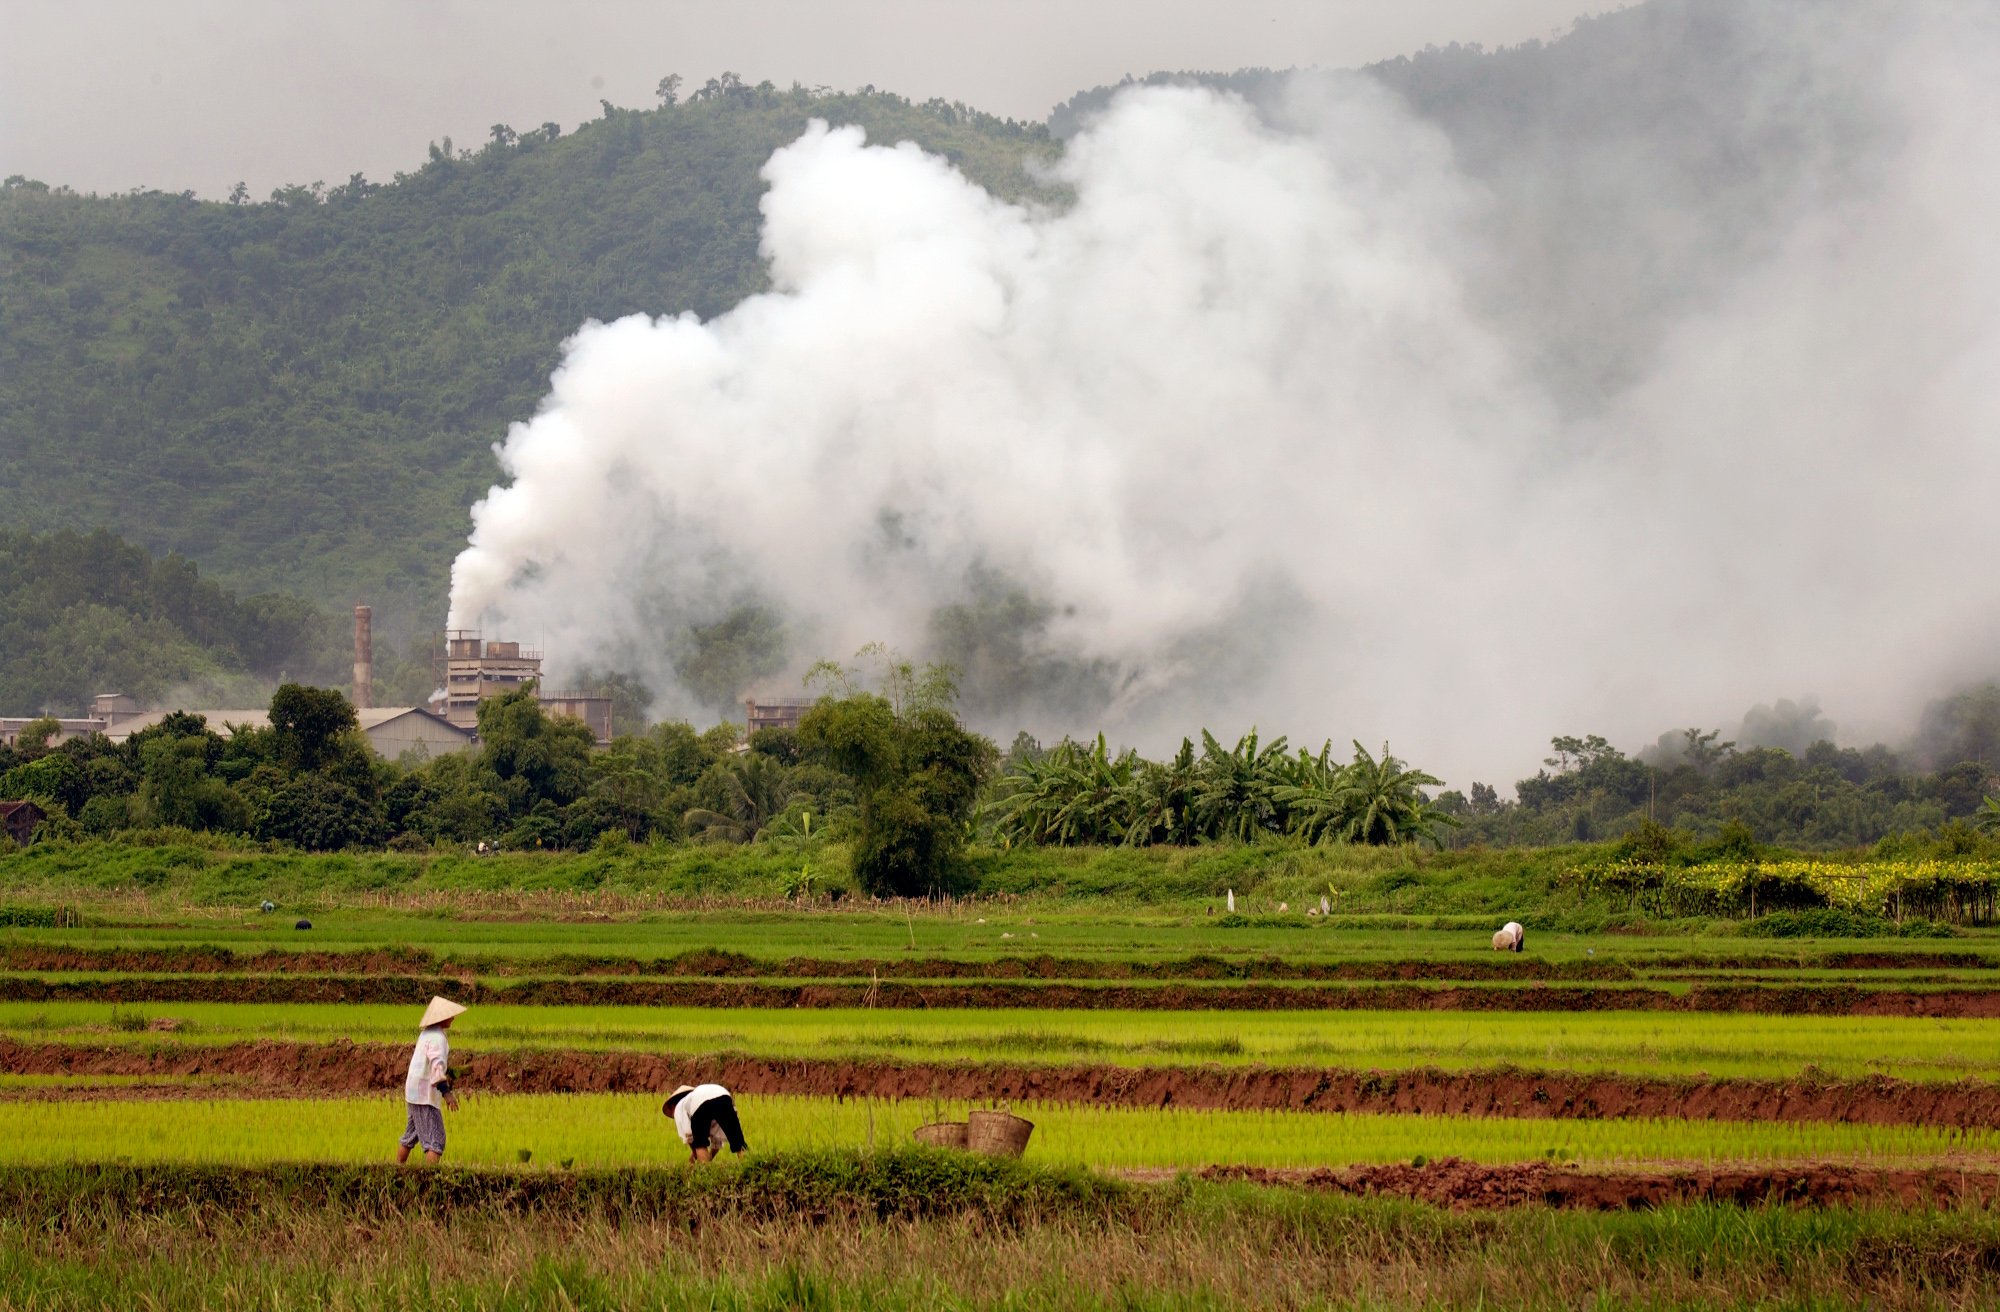 Vietnam Rice and Smoke - storytelling with digital photos